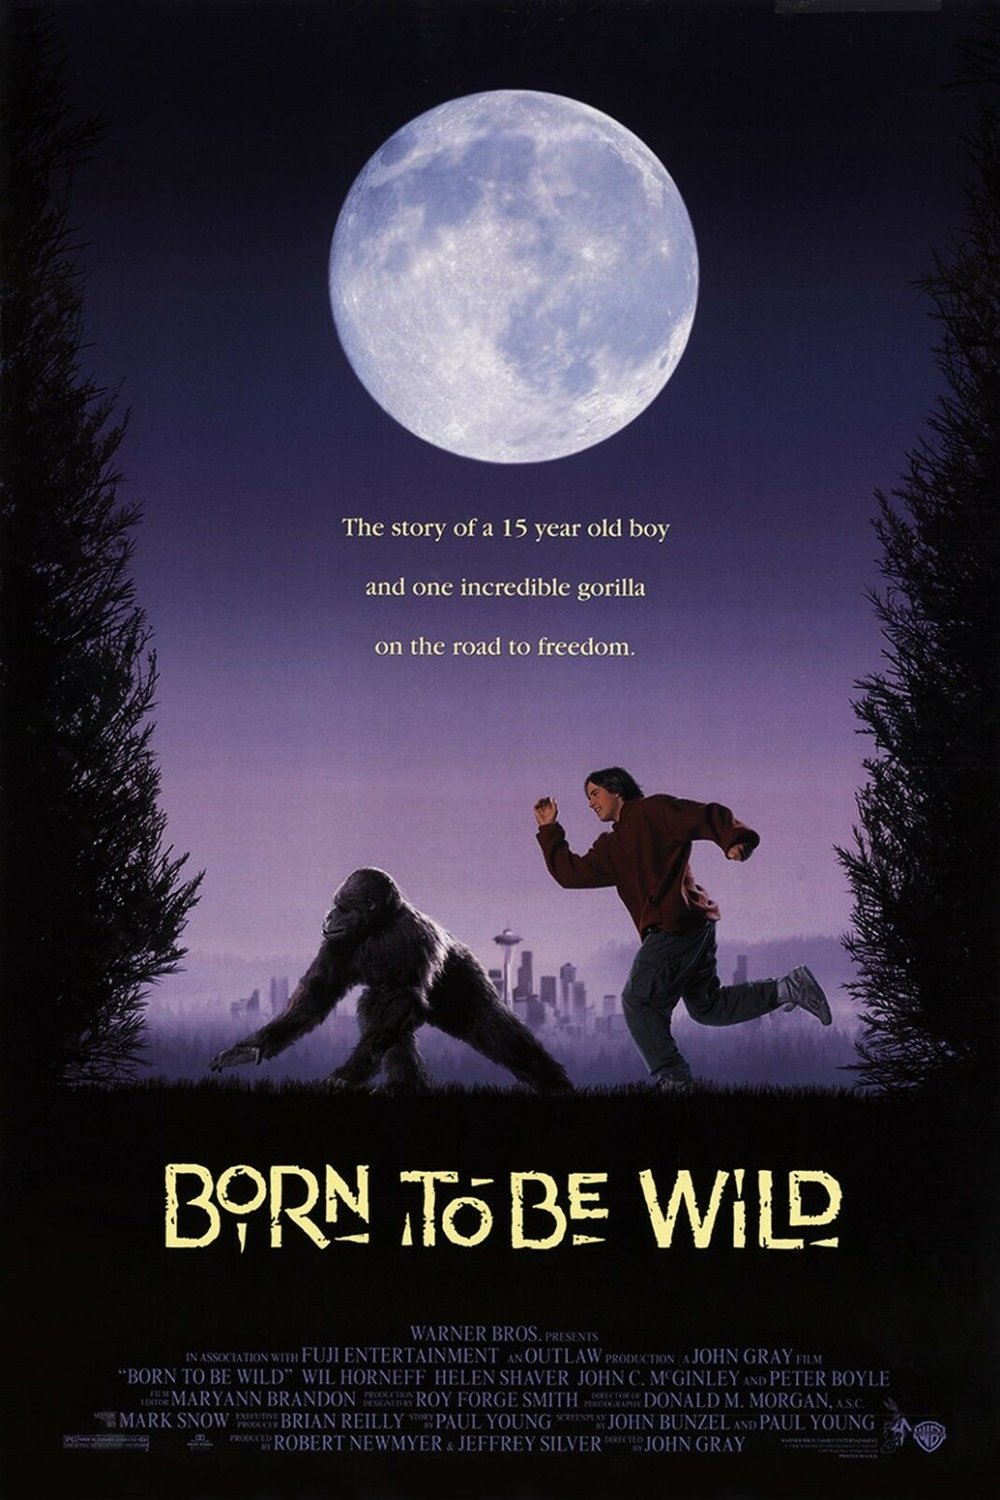 L'affiche du film Born to Be Wild